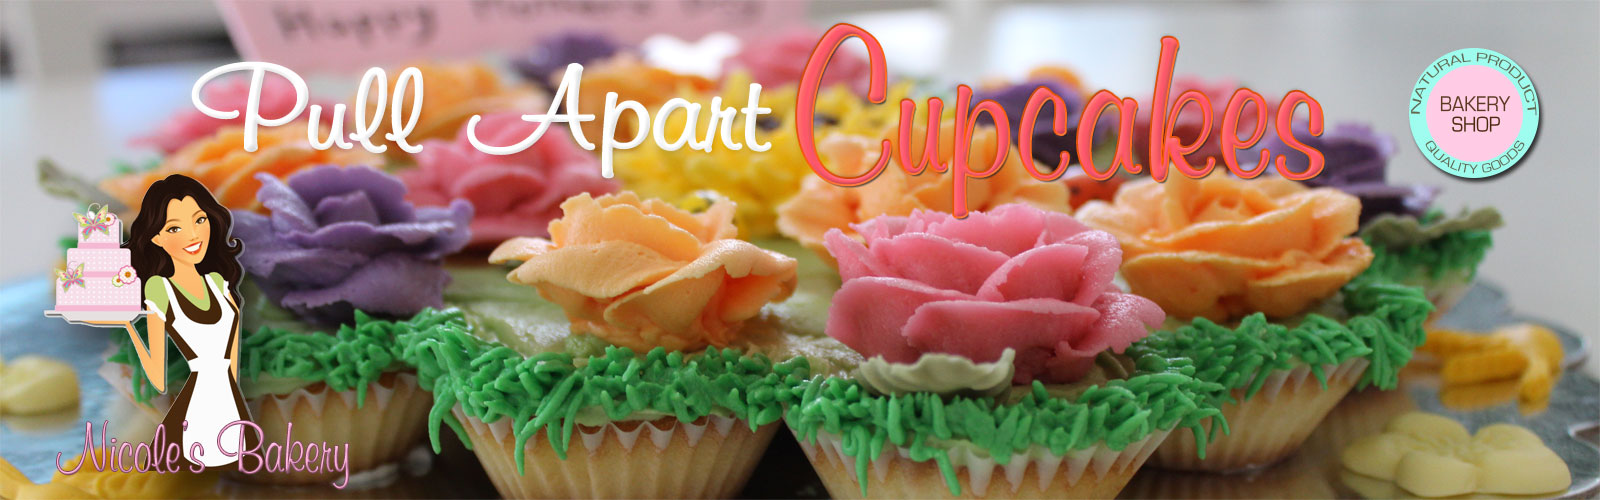 pull-apart-cupcakes